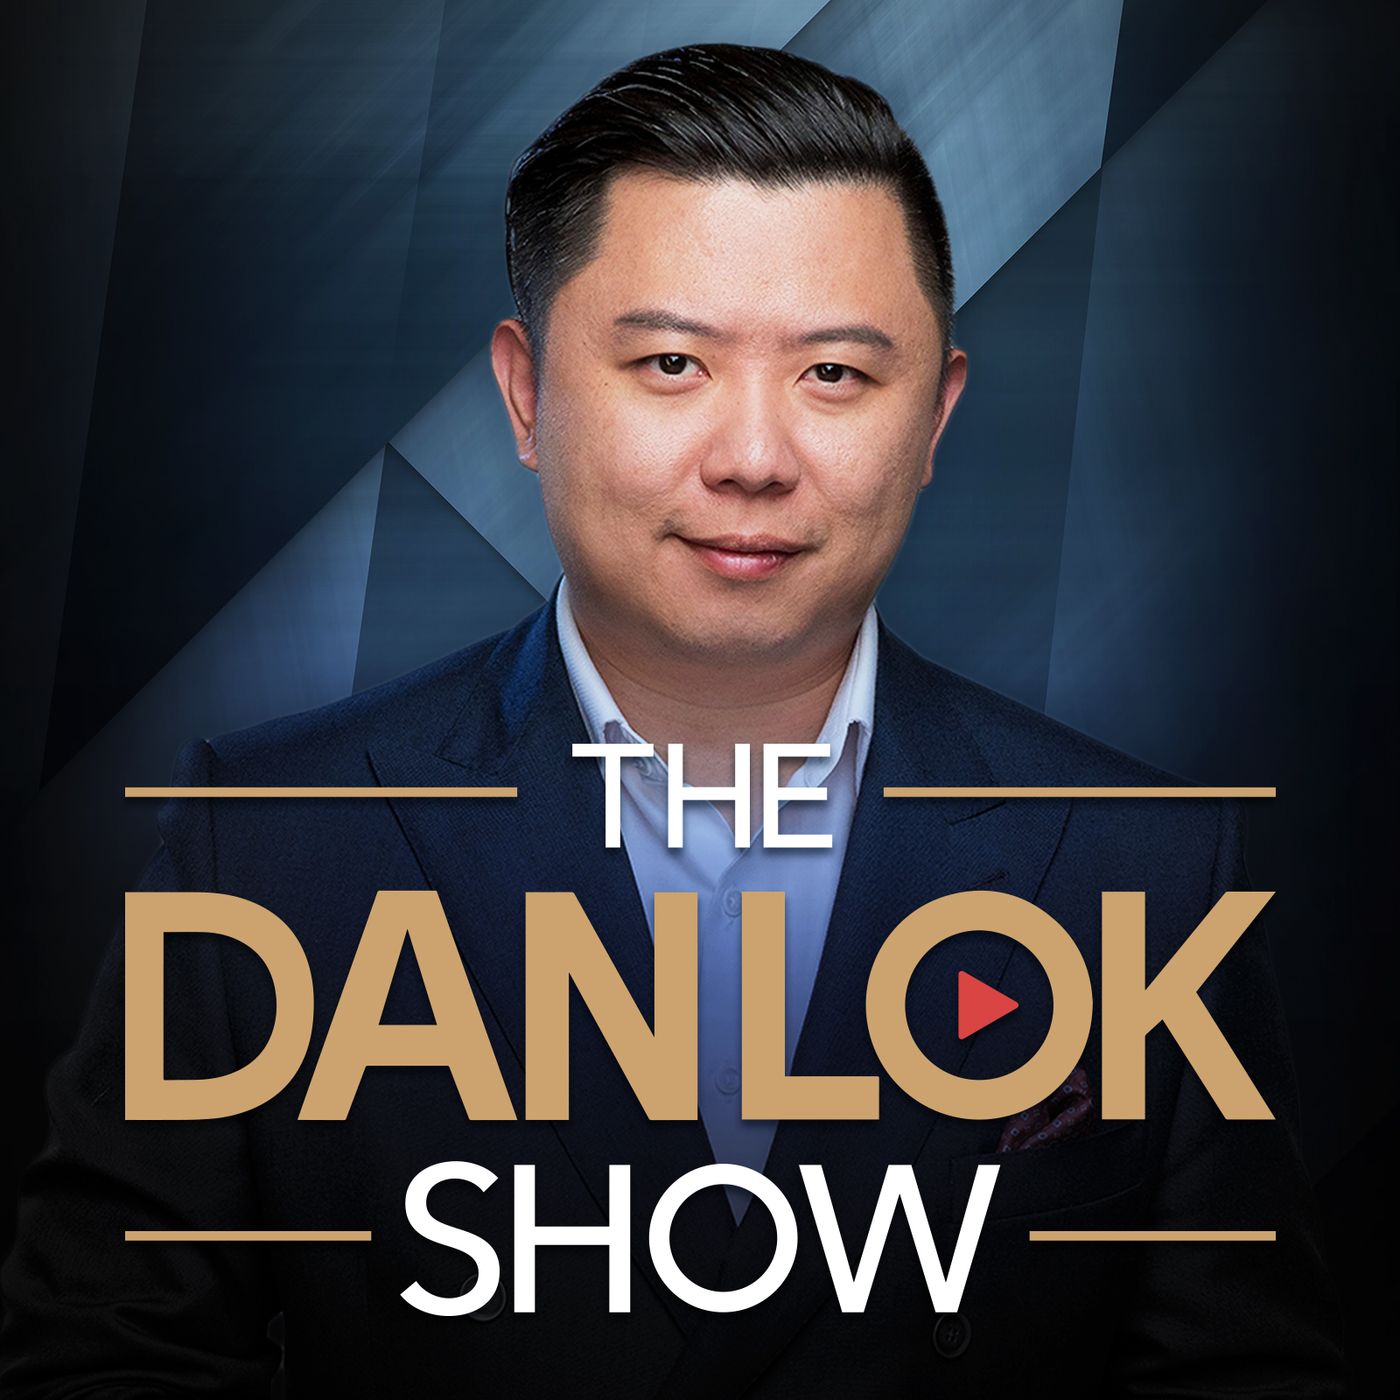 Dan Lok Show:Dan Lok